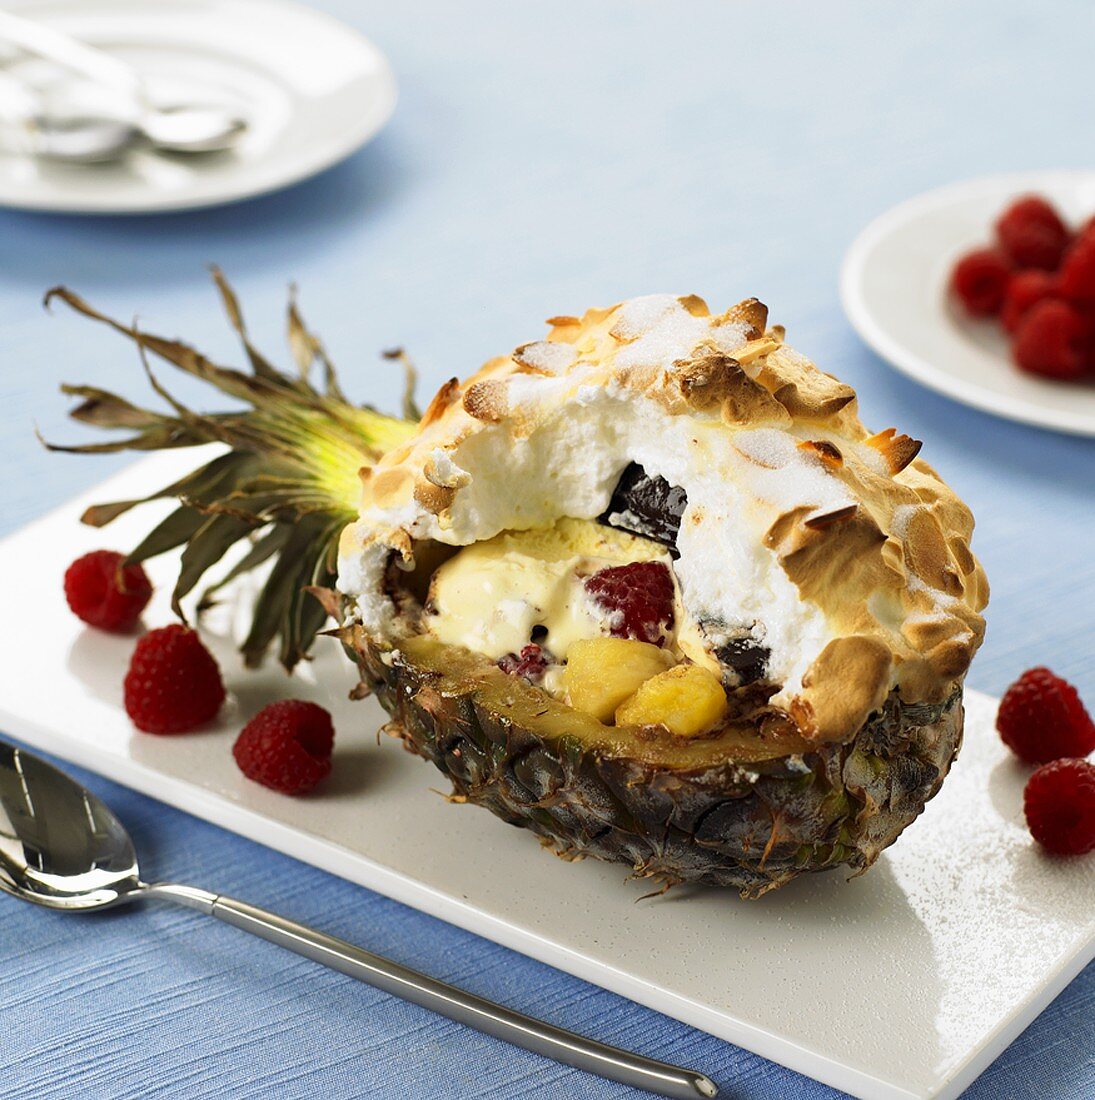 Vanilla ice cream & fruit under baked meringue in pineapple